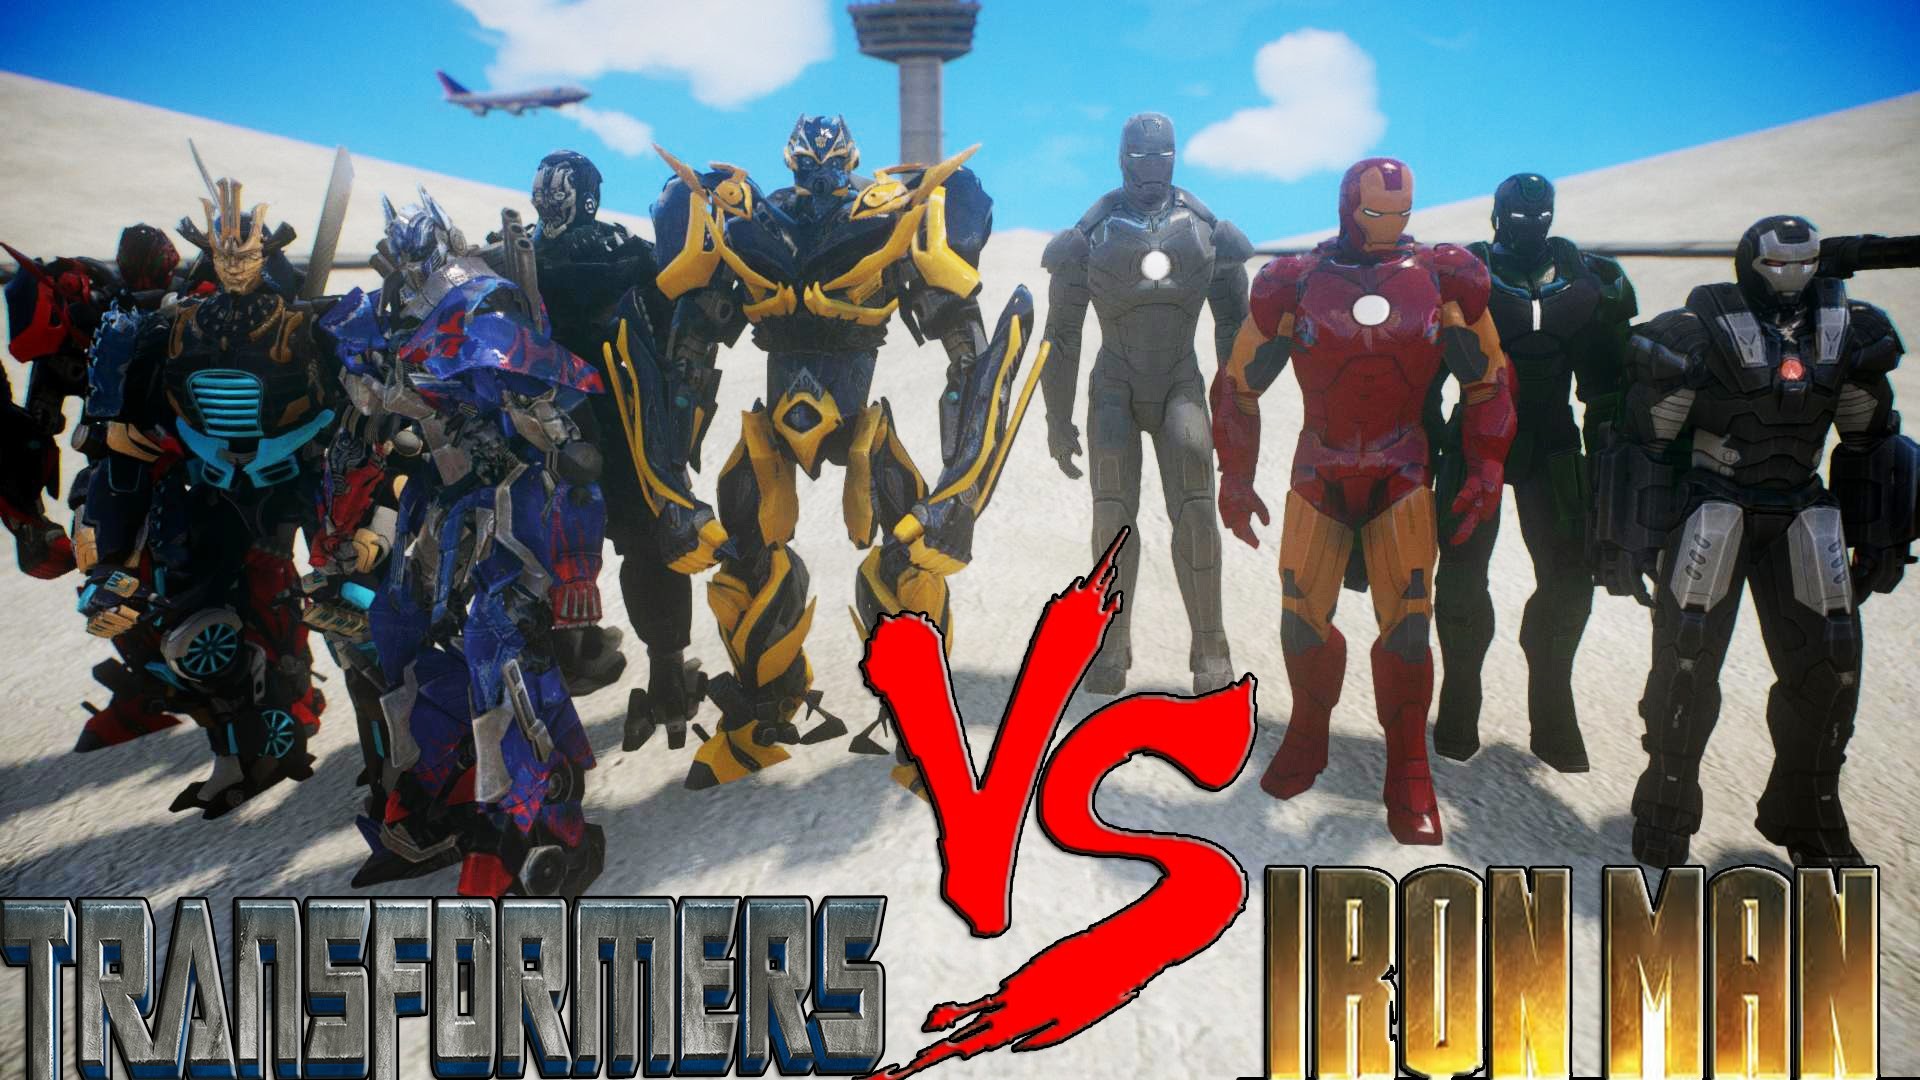 1920x1080 Iron man armors army suit VS Transformers Autobot - EPIC BATTLE - YouTube